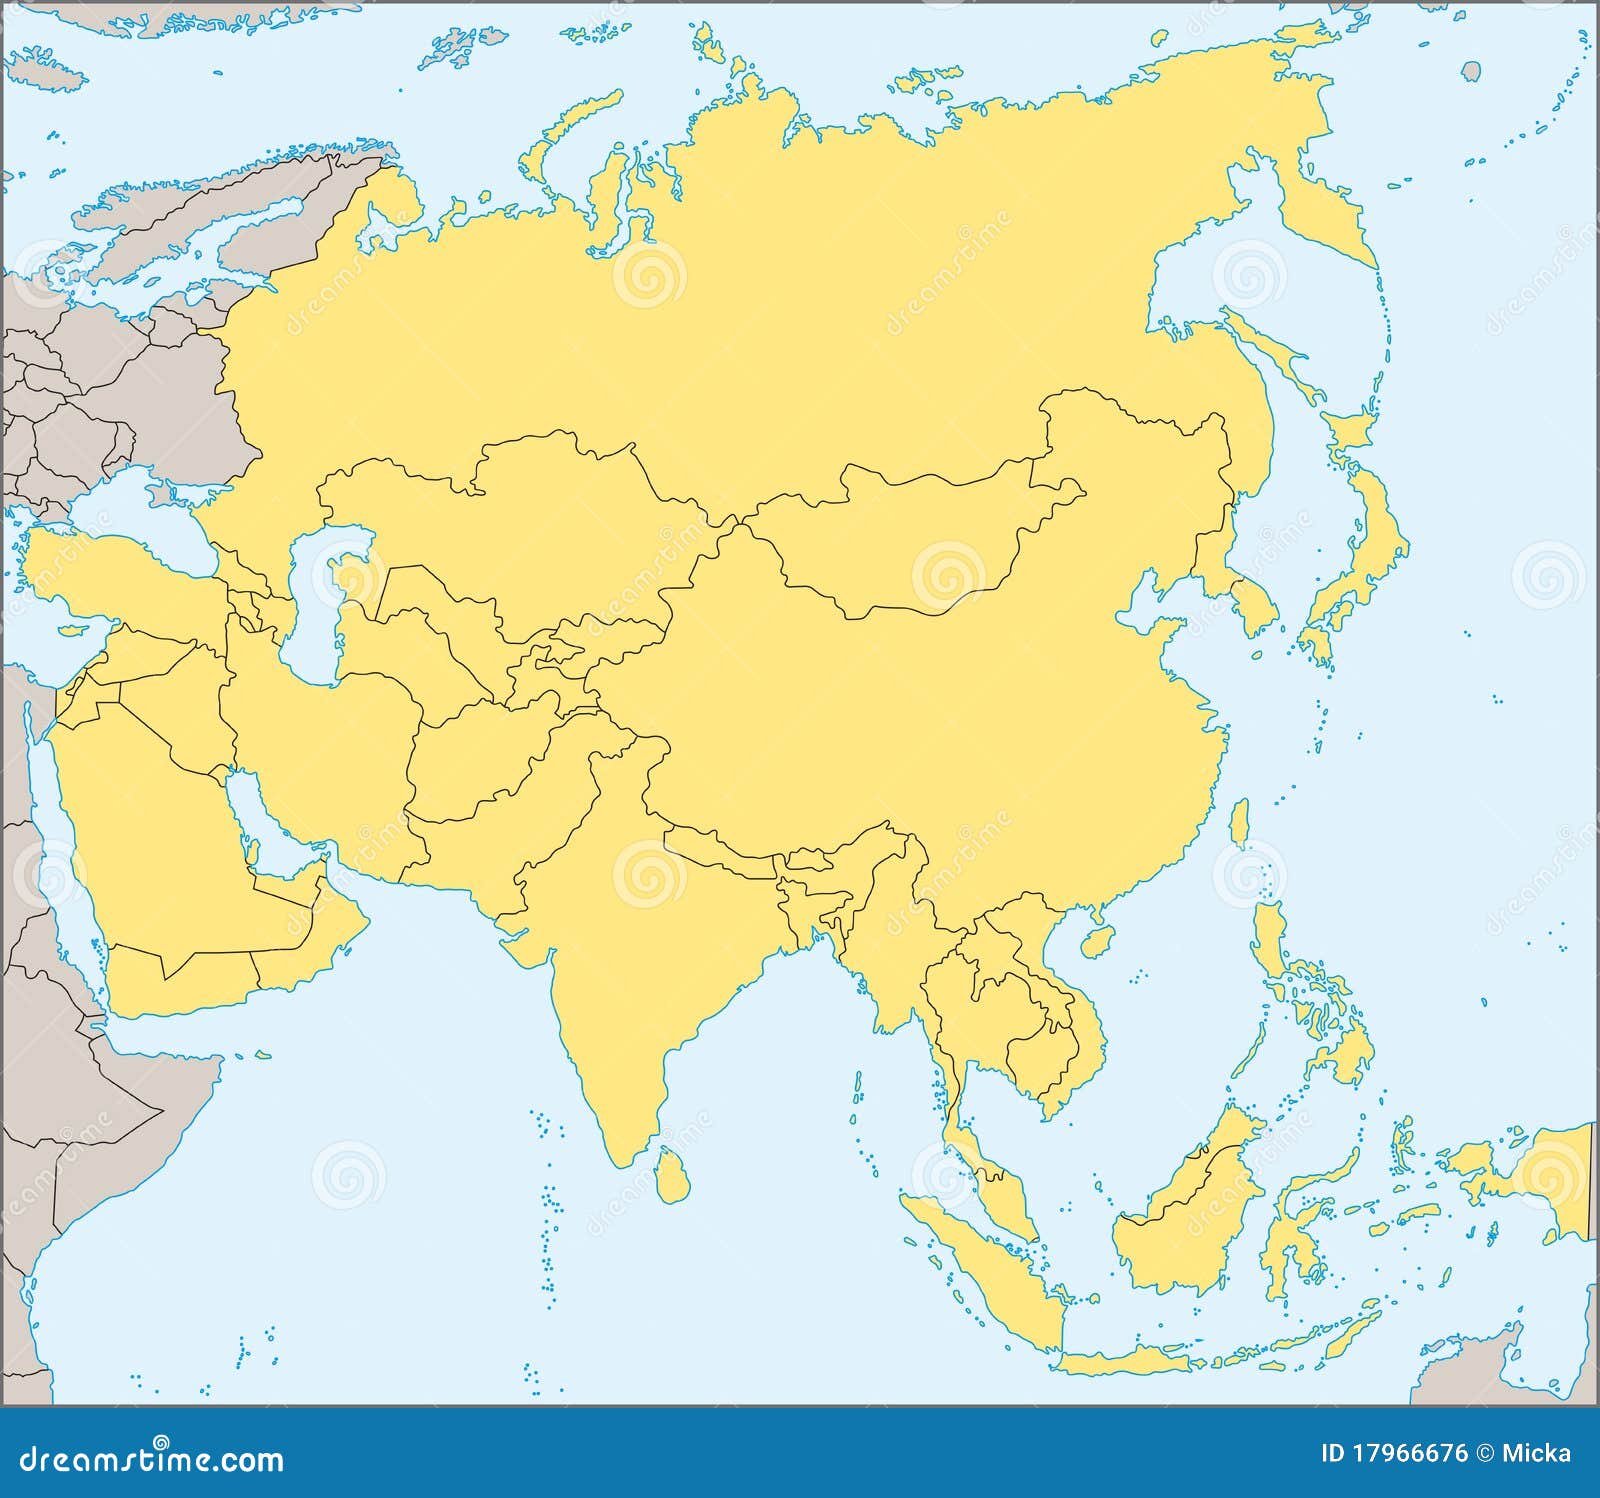 asia political map